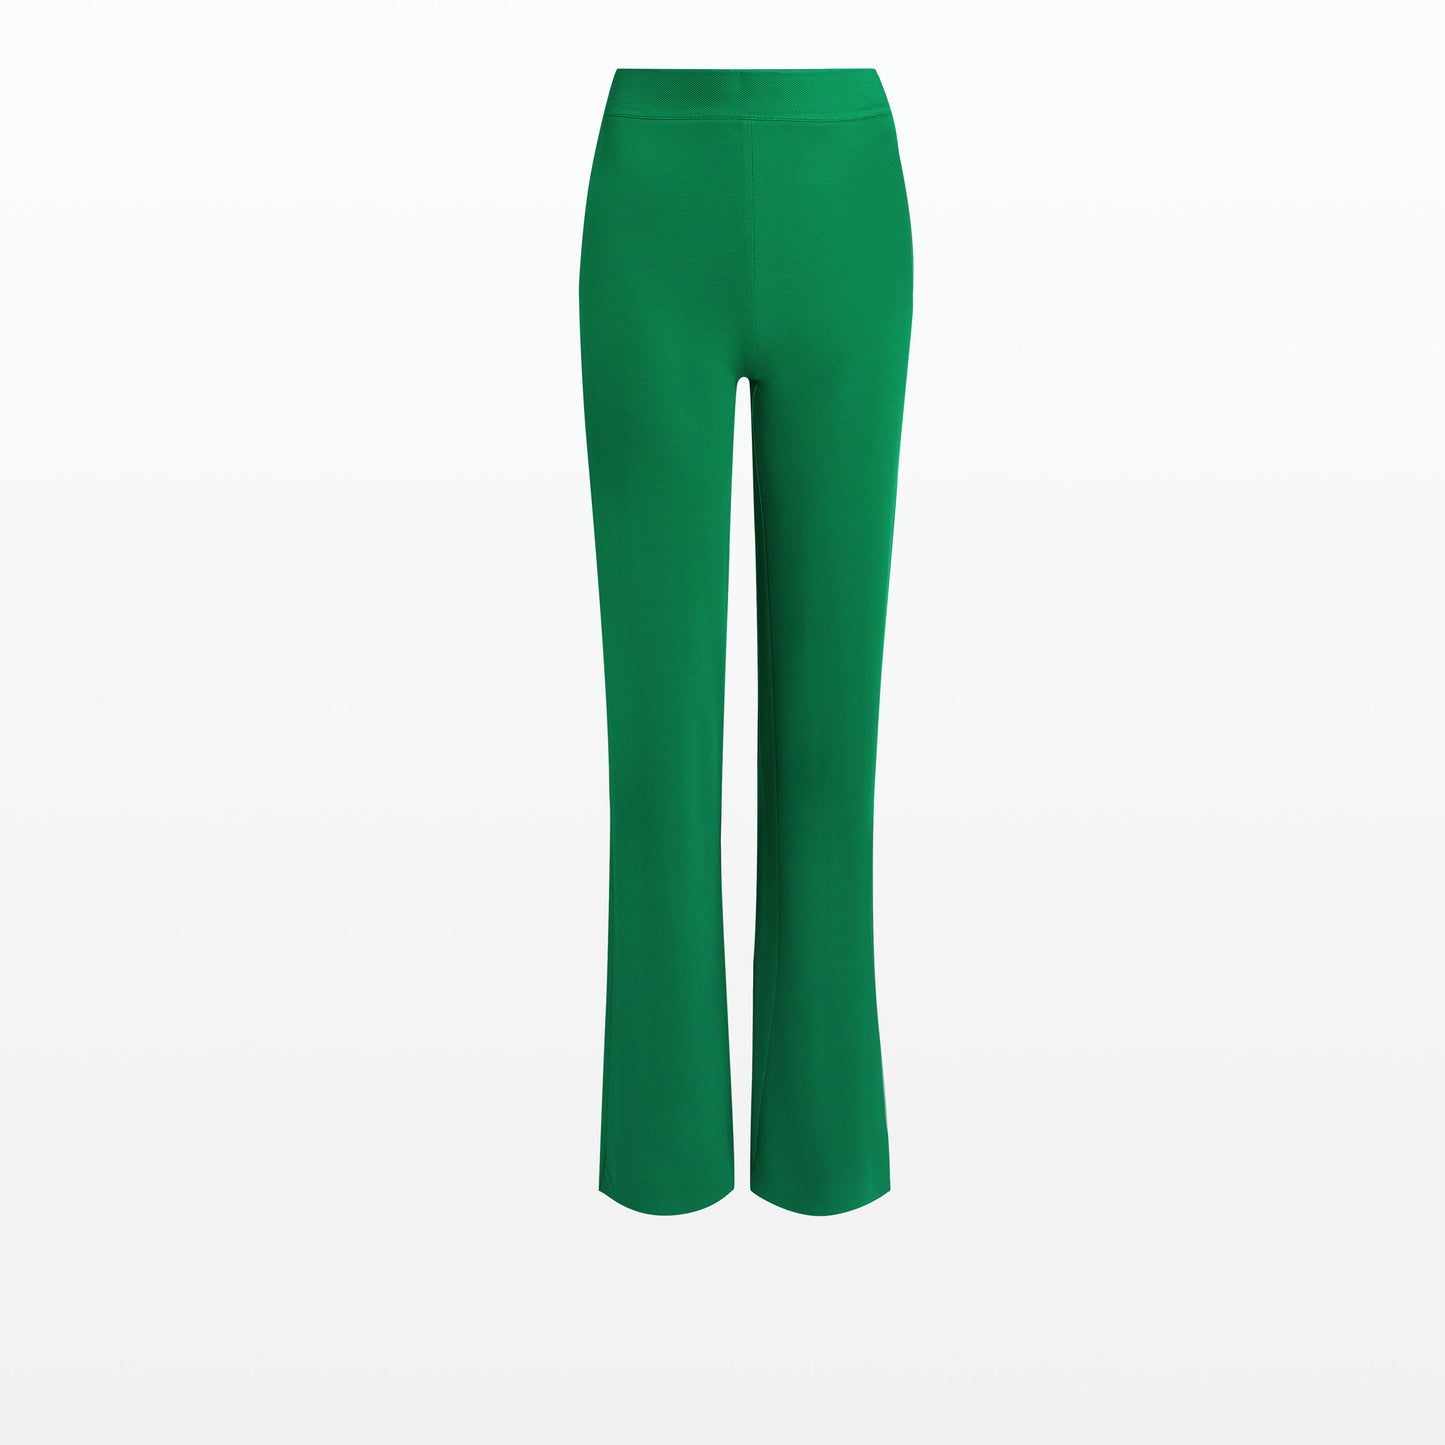 Lea Jewel Green Trousers